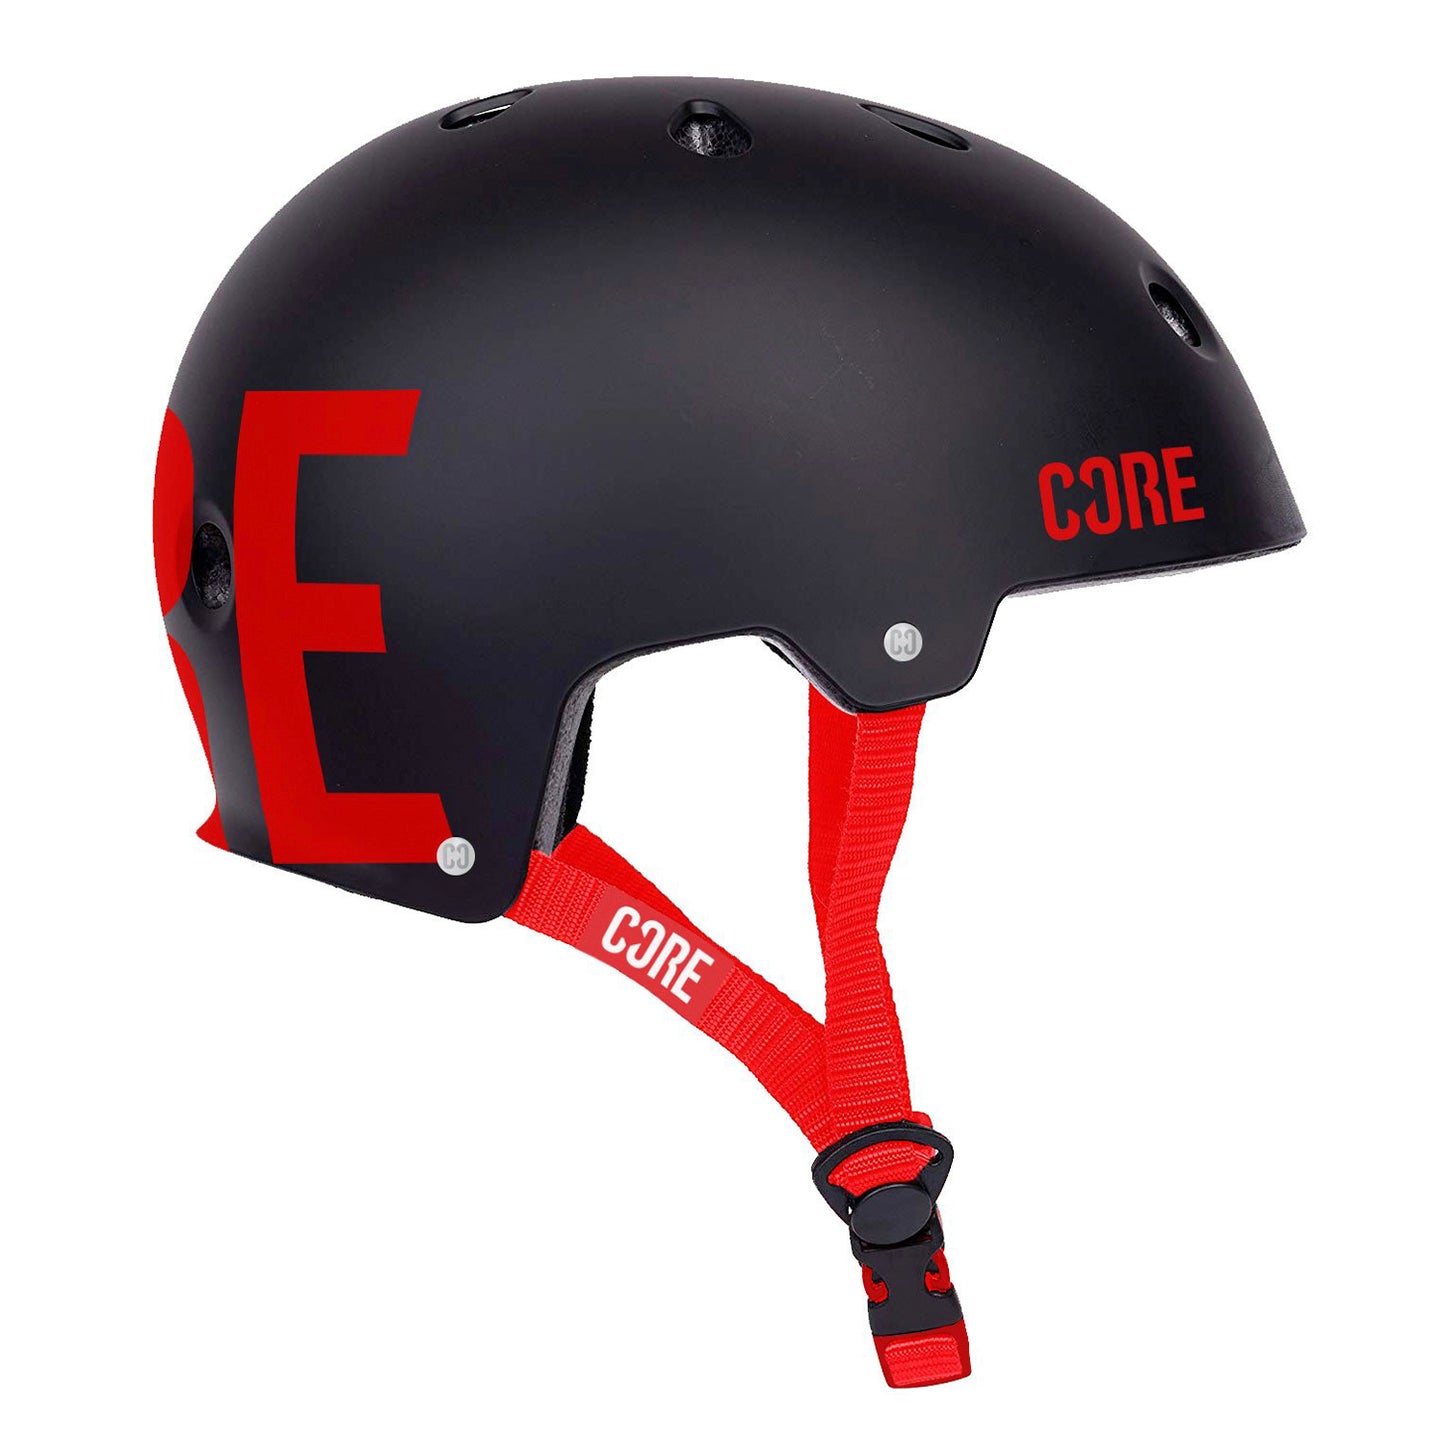 CORE Street Helmet - Red / Black - Prime Delux Store